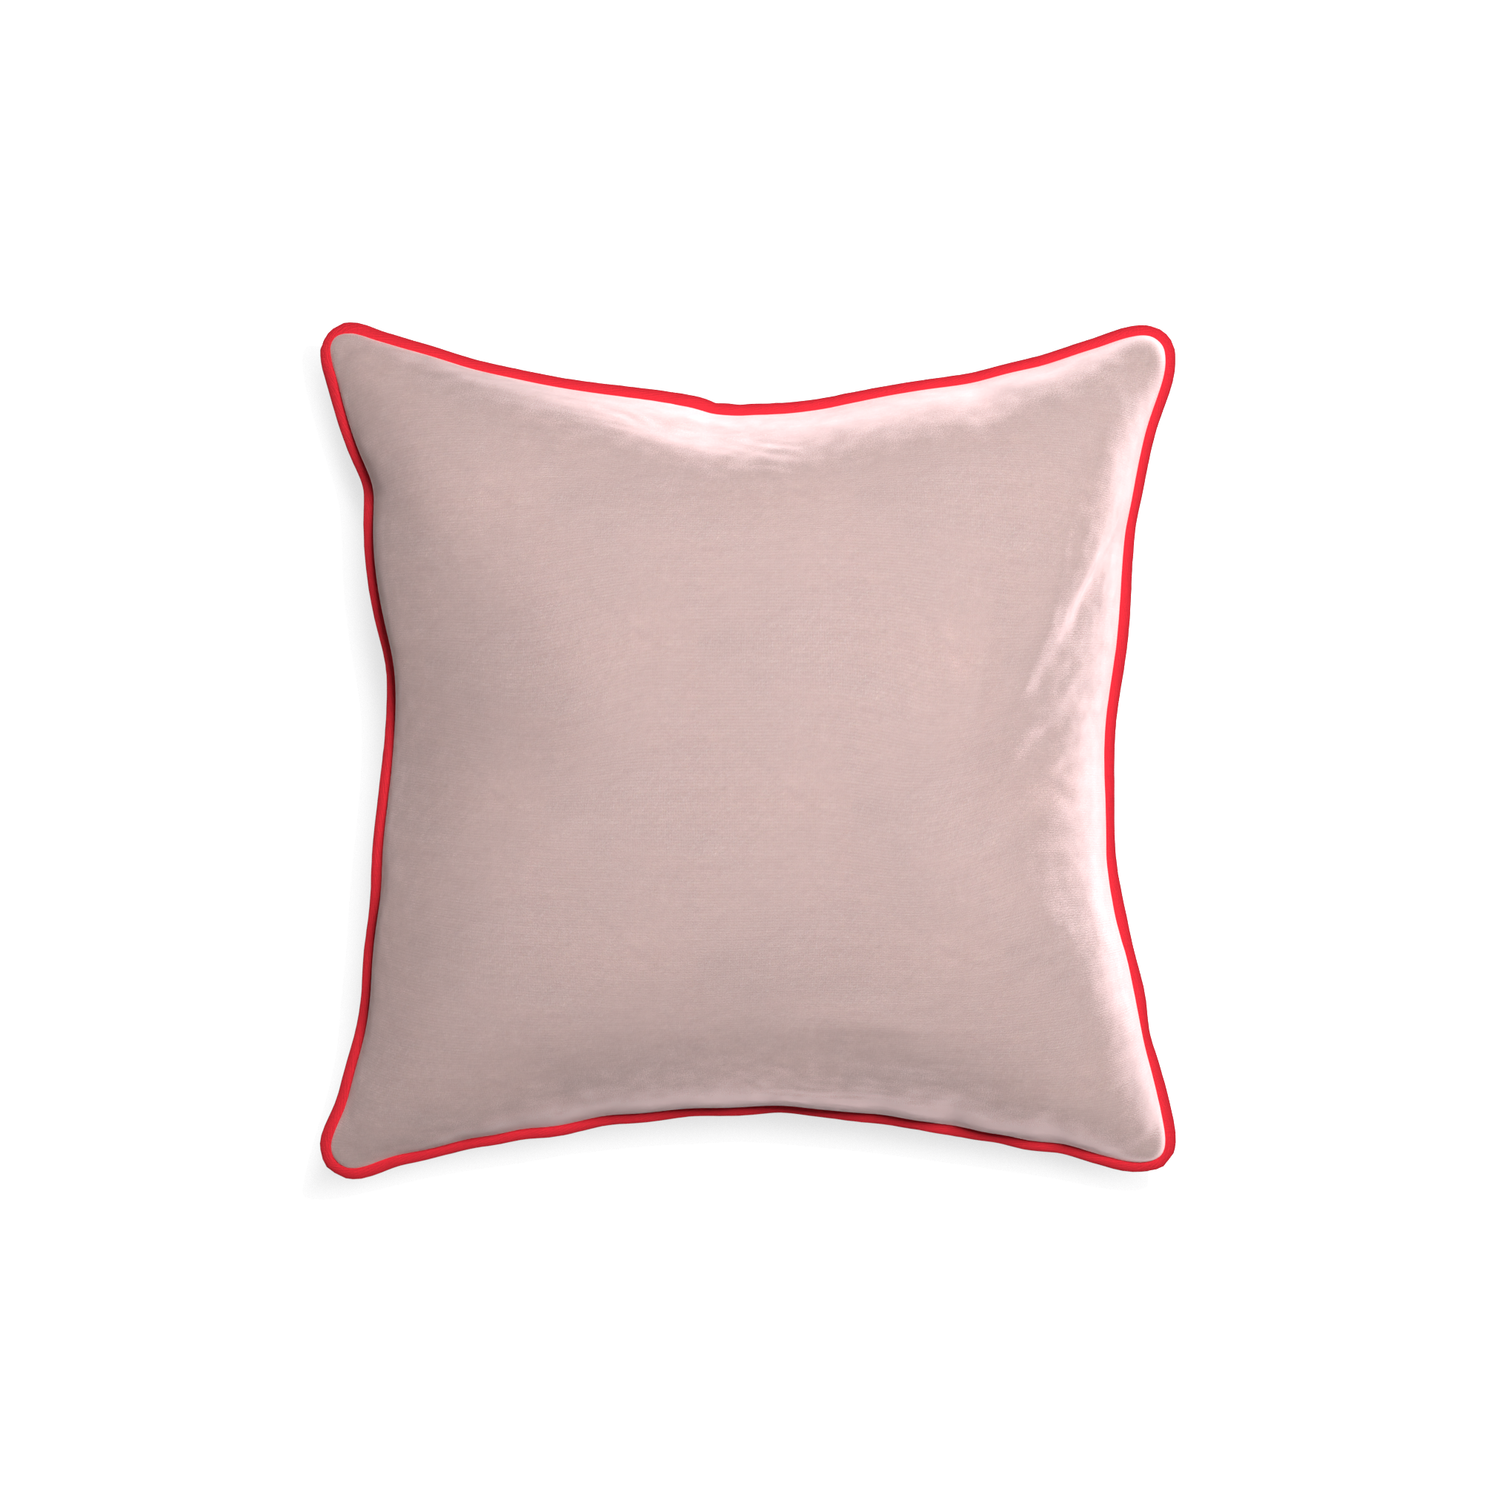 18-square rose velvet custom pillow with cherry piping on white background